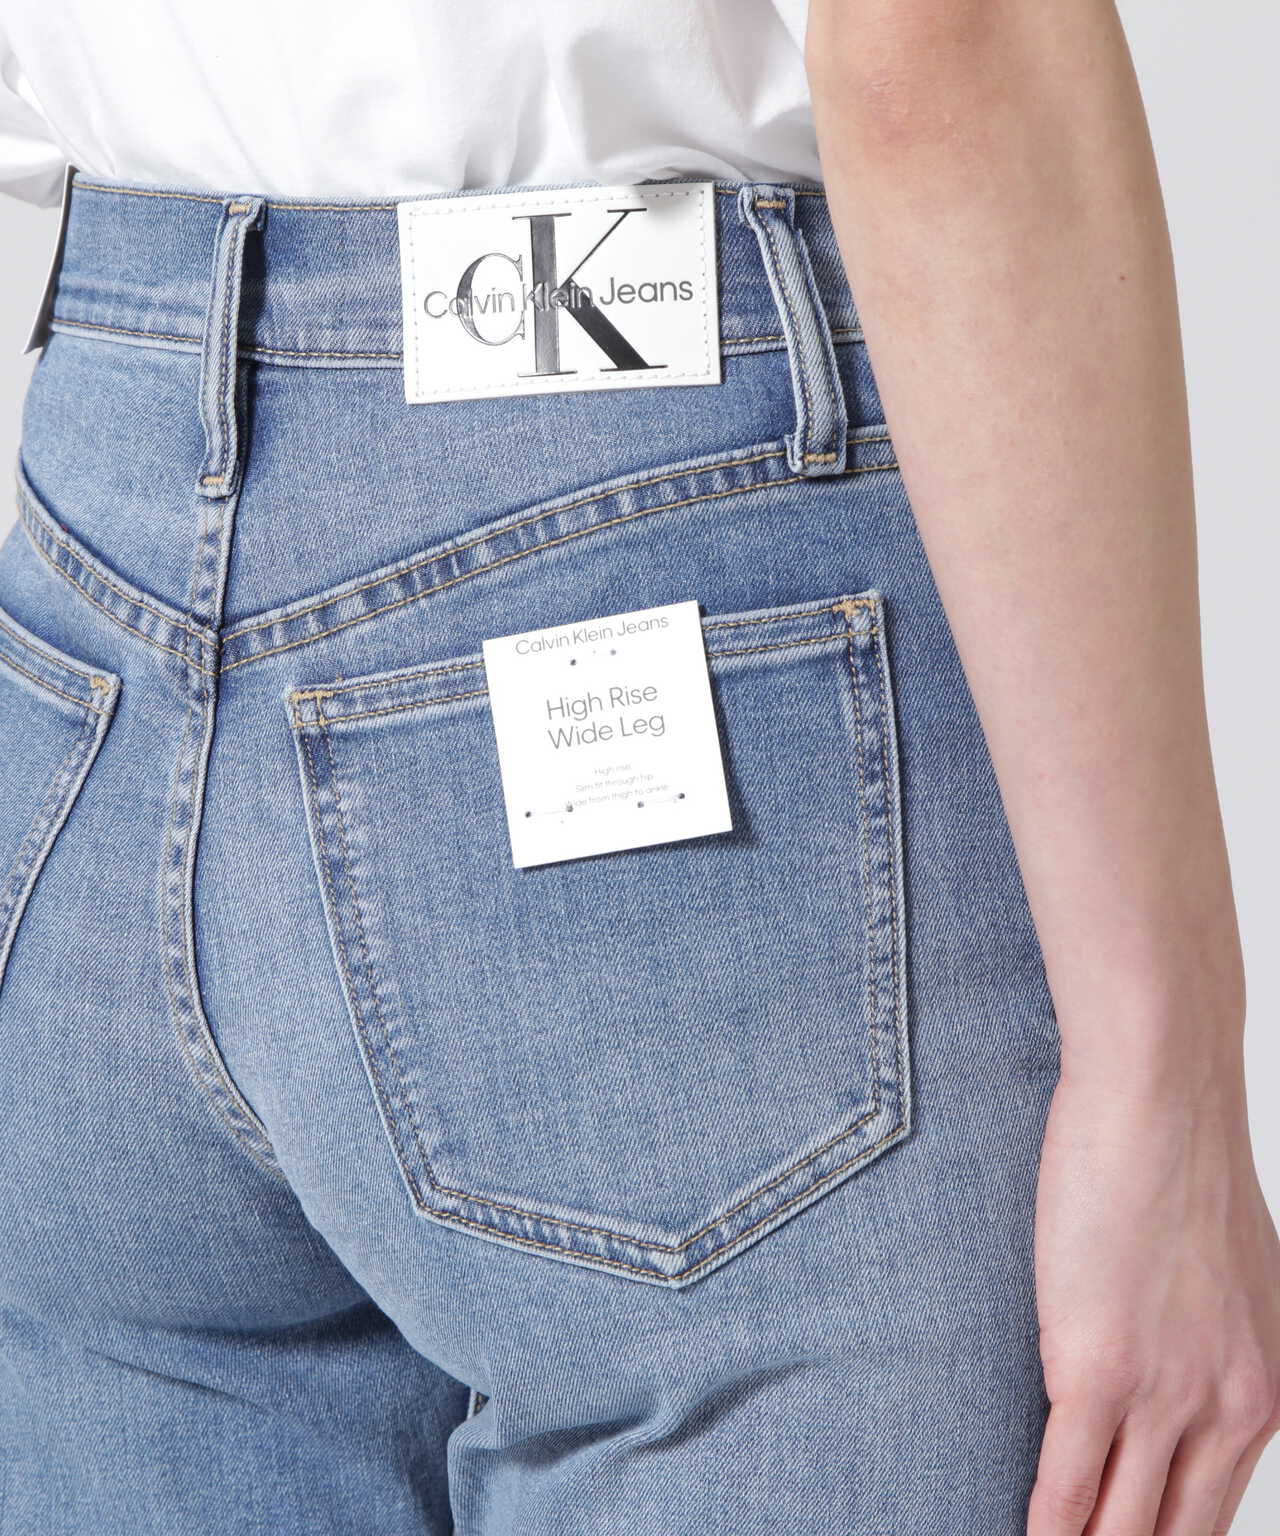 Druif Hond patroon Calvin Klein Jeans（カルバンクラインジーンズ）HIGH RISE WIDE LEG JEANS | B'2nd ( ビーセカンド )  | US ONLINE STORE（US オンラインストア）